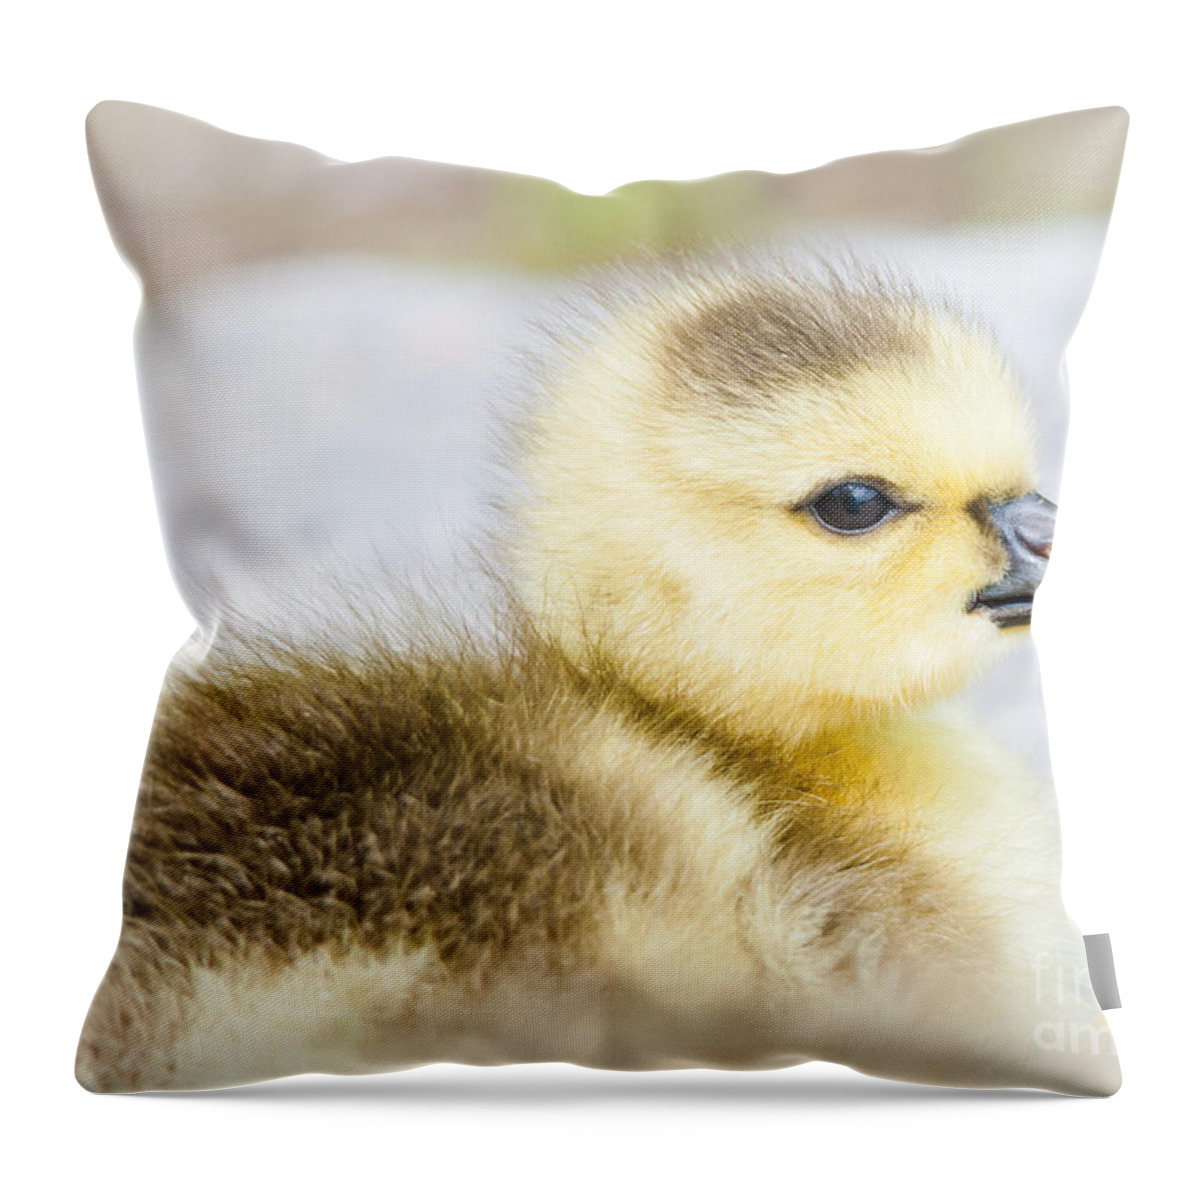 Gosling Throw Pillow featuring the photograph Fuzzy Cuteness by Cheryl Baxter